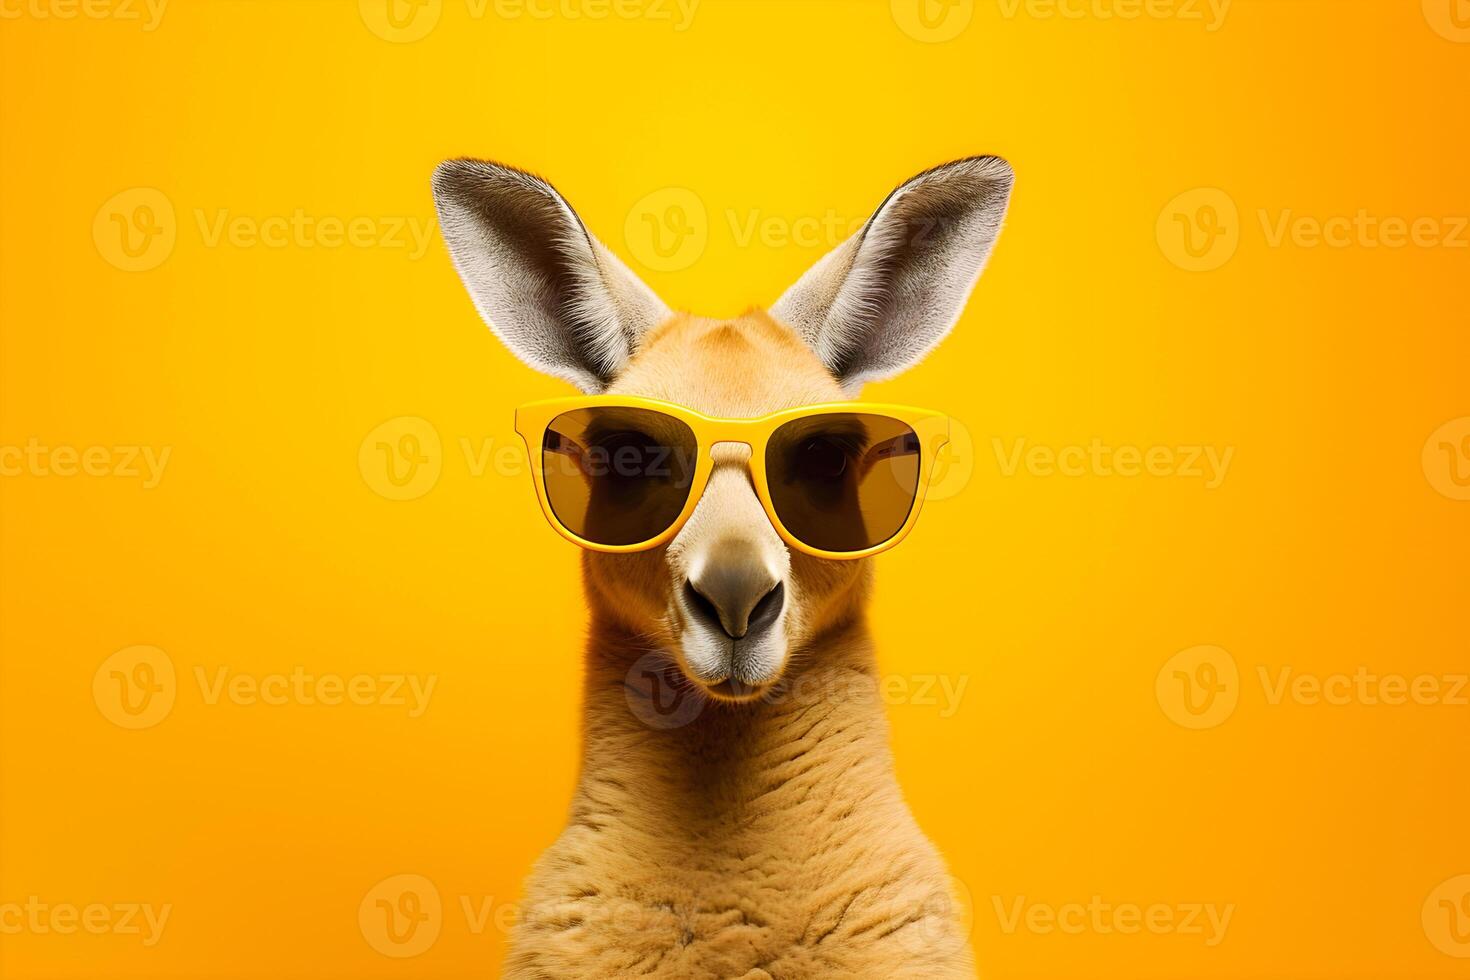 AI generated Portrait of a kangaroo in sunglasses on yellow background, studio shot. AI generated photo